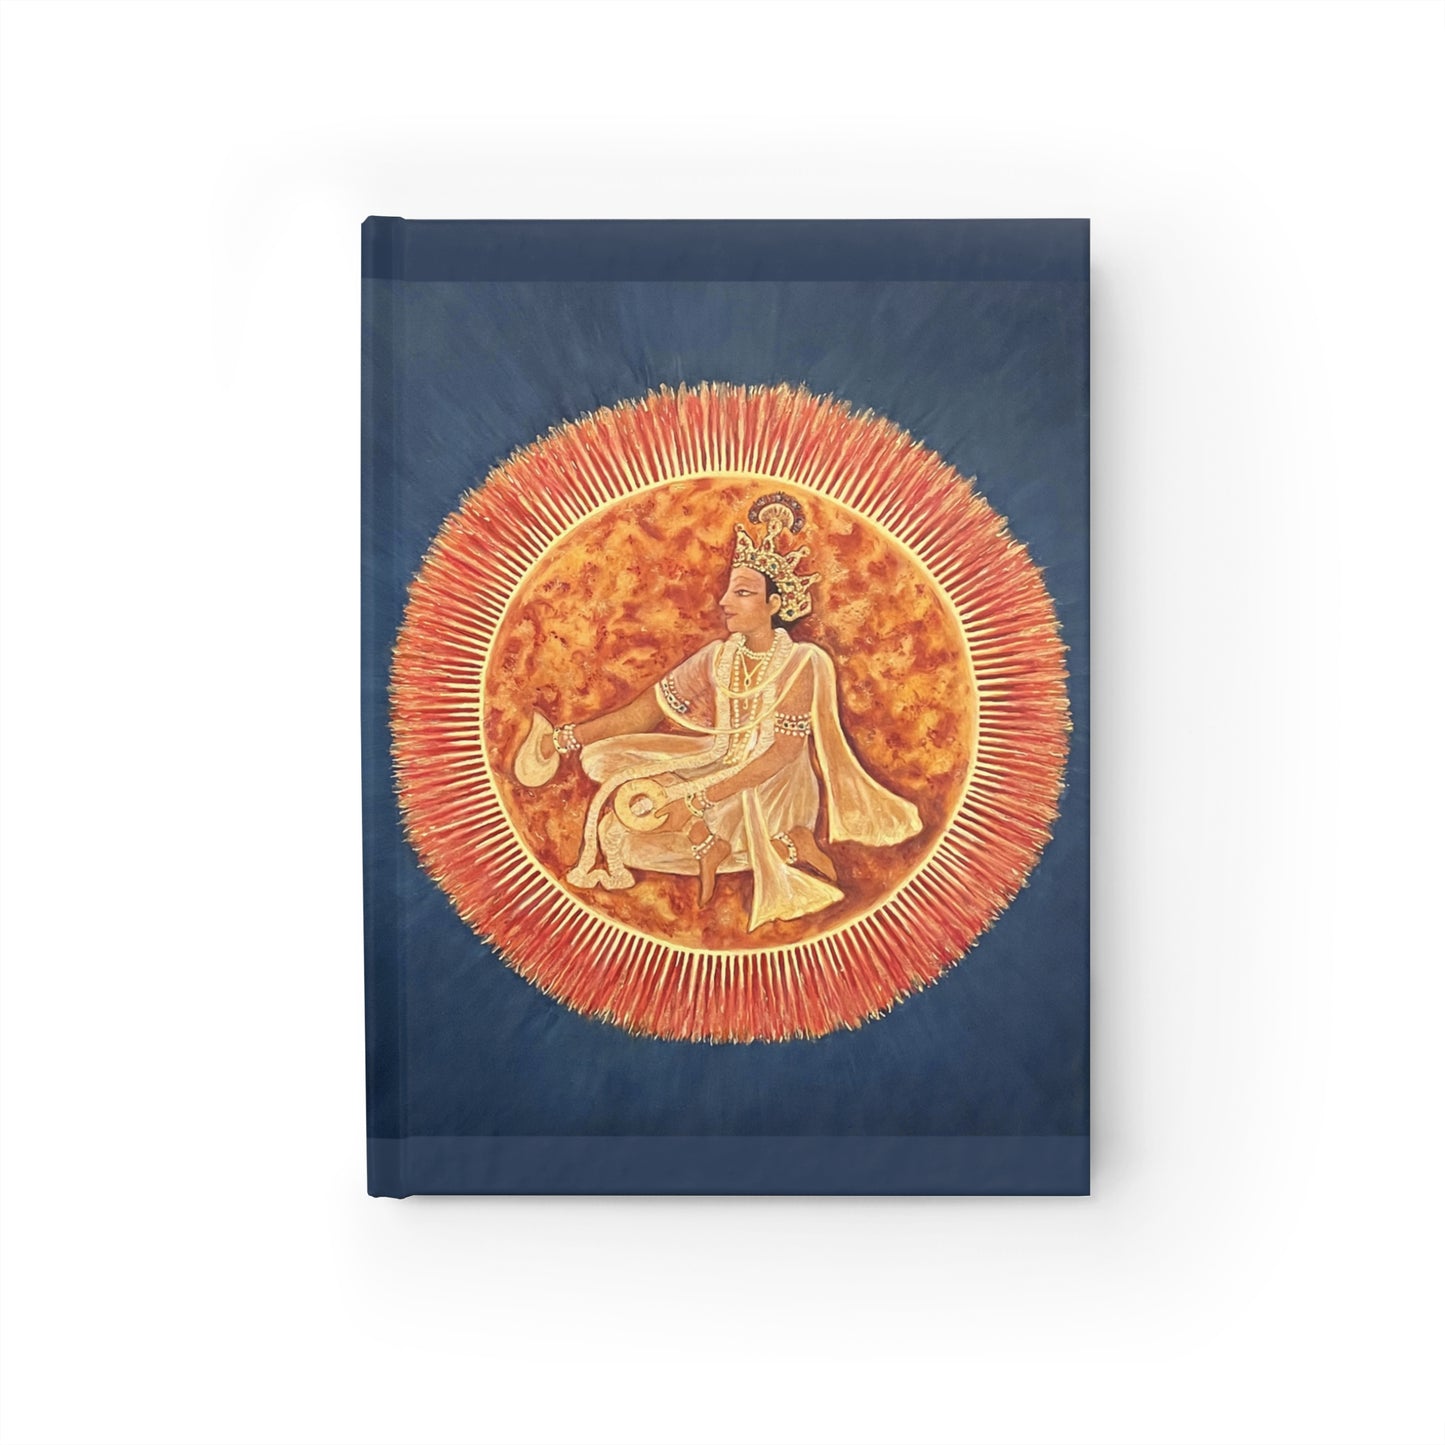 Copy of Surya, The Sun God, Journal - Ruled Line